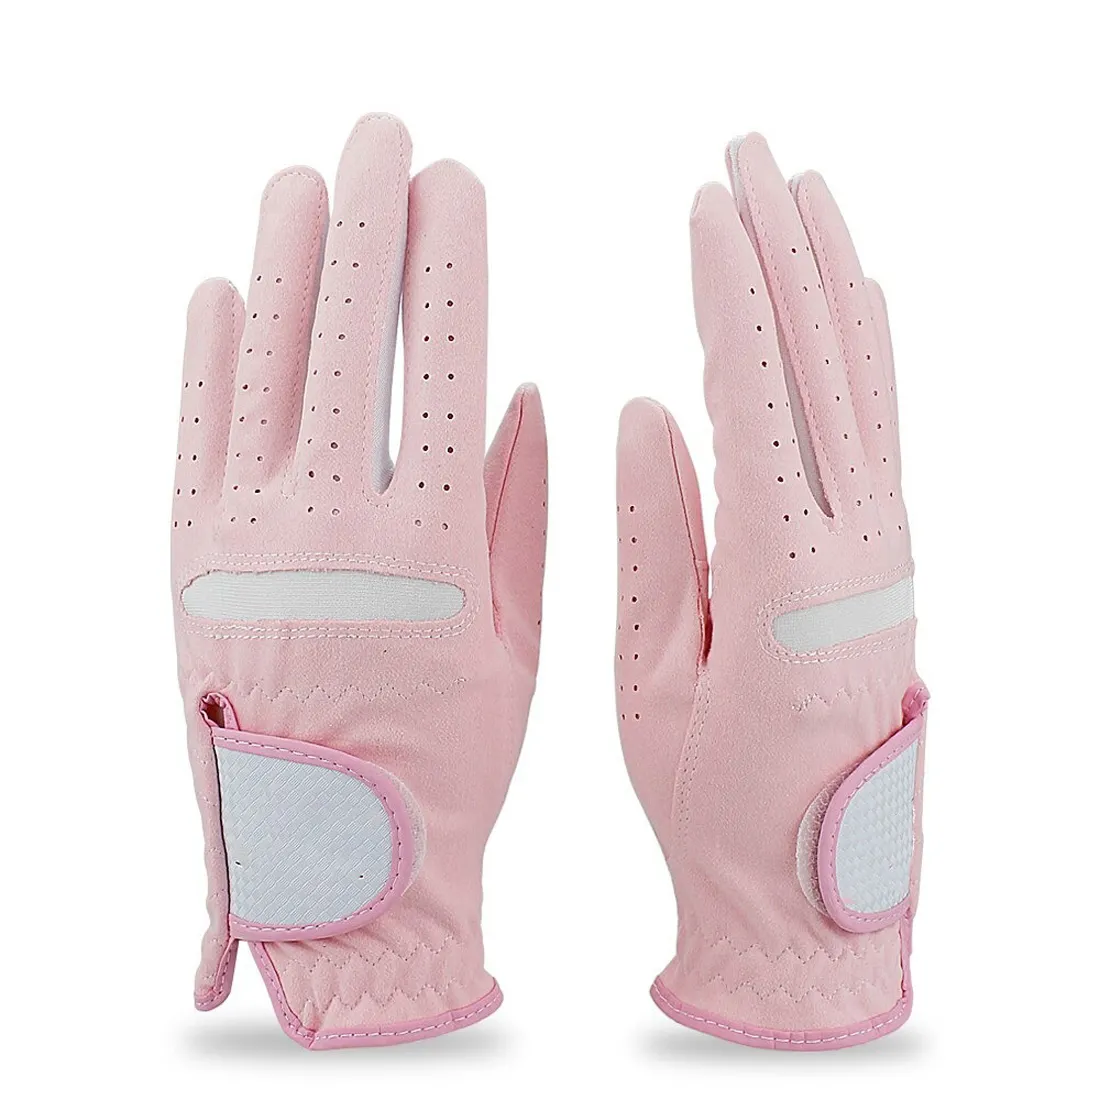 Premium Quality Golf Gloves Men Left Hand Right Soft Leather Men's Glove Size All S M ML L XL